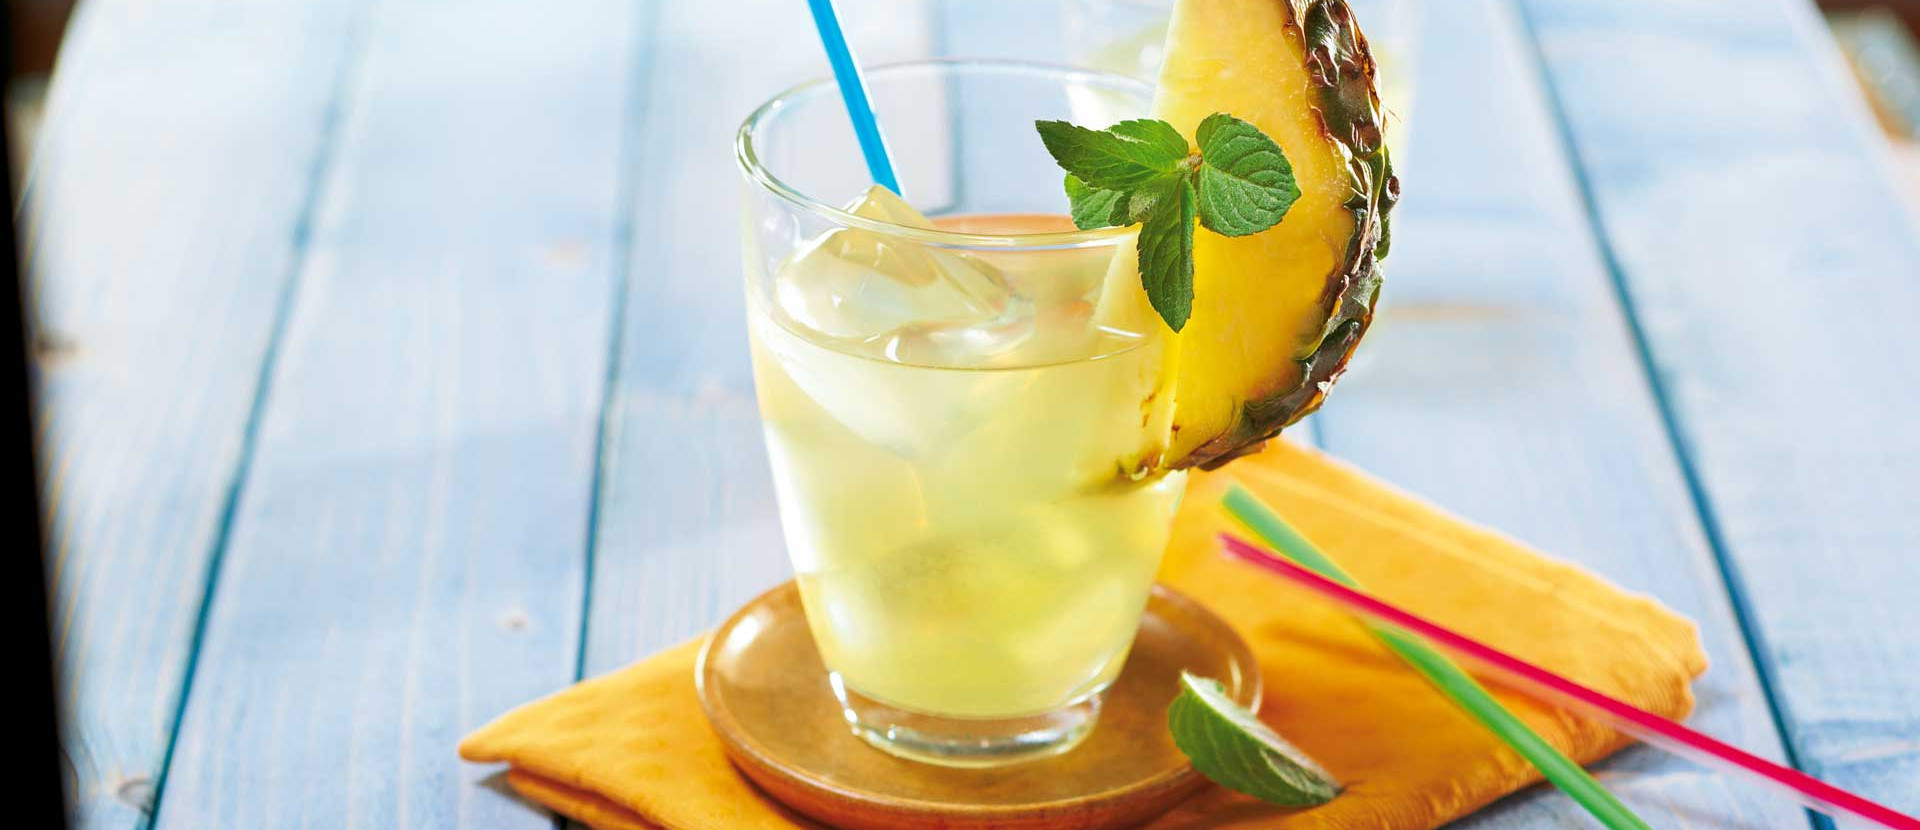 Kokoswasser-Ananas- Drink Rezept | tegut...